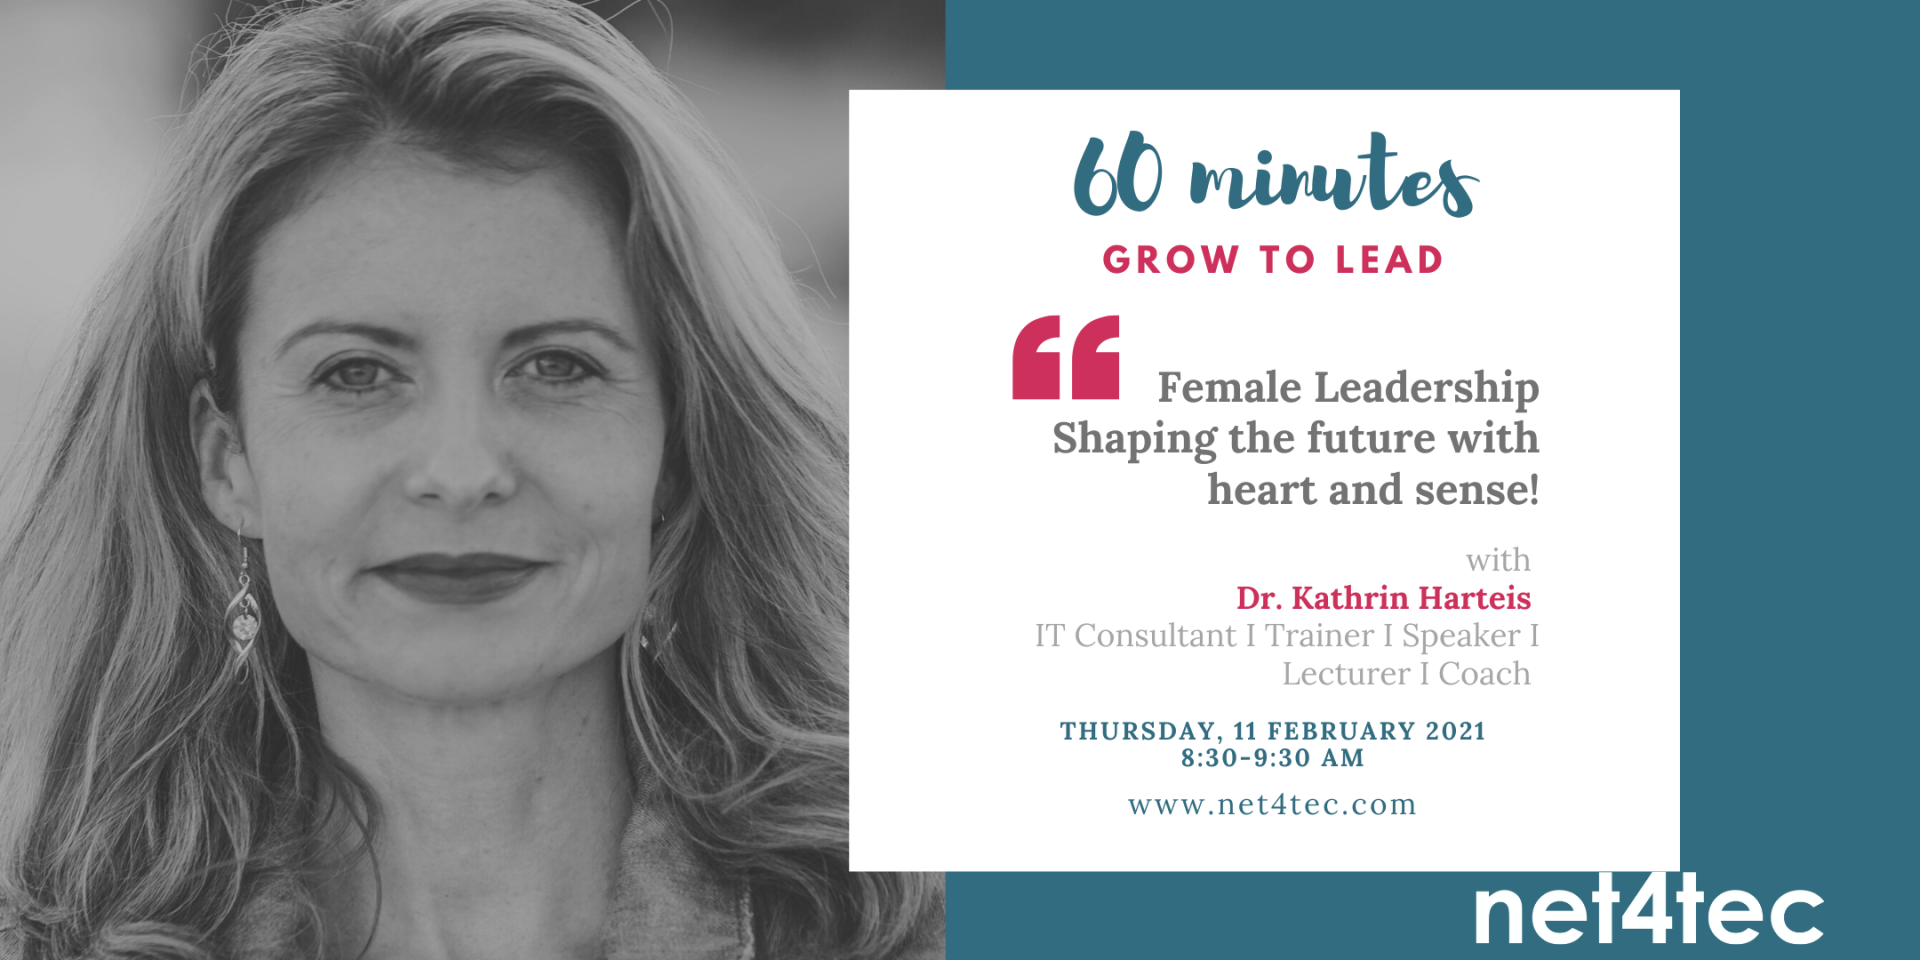 60' Grow to Lead - with Dr. Kathrin Harteis "Female Leadership" | net4tec